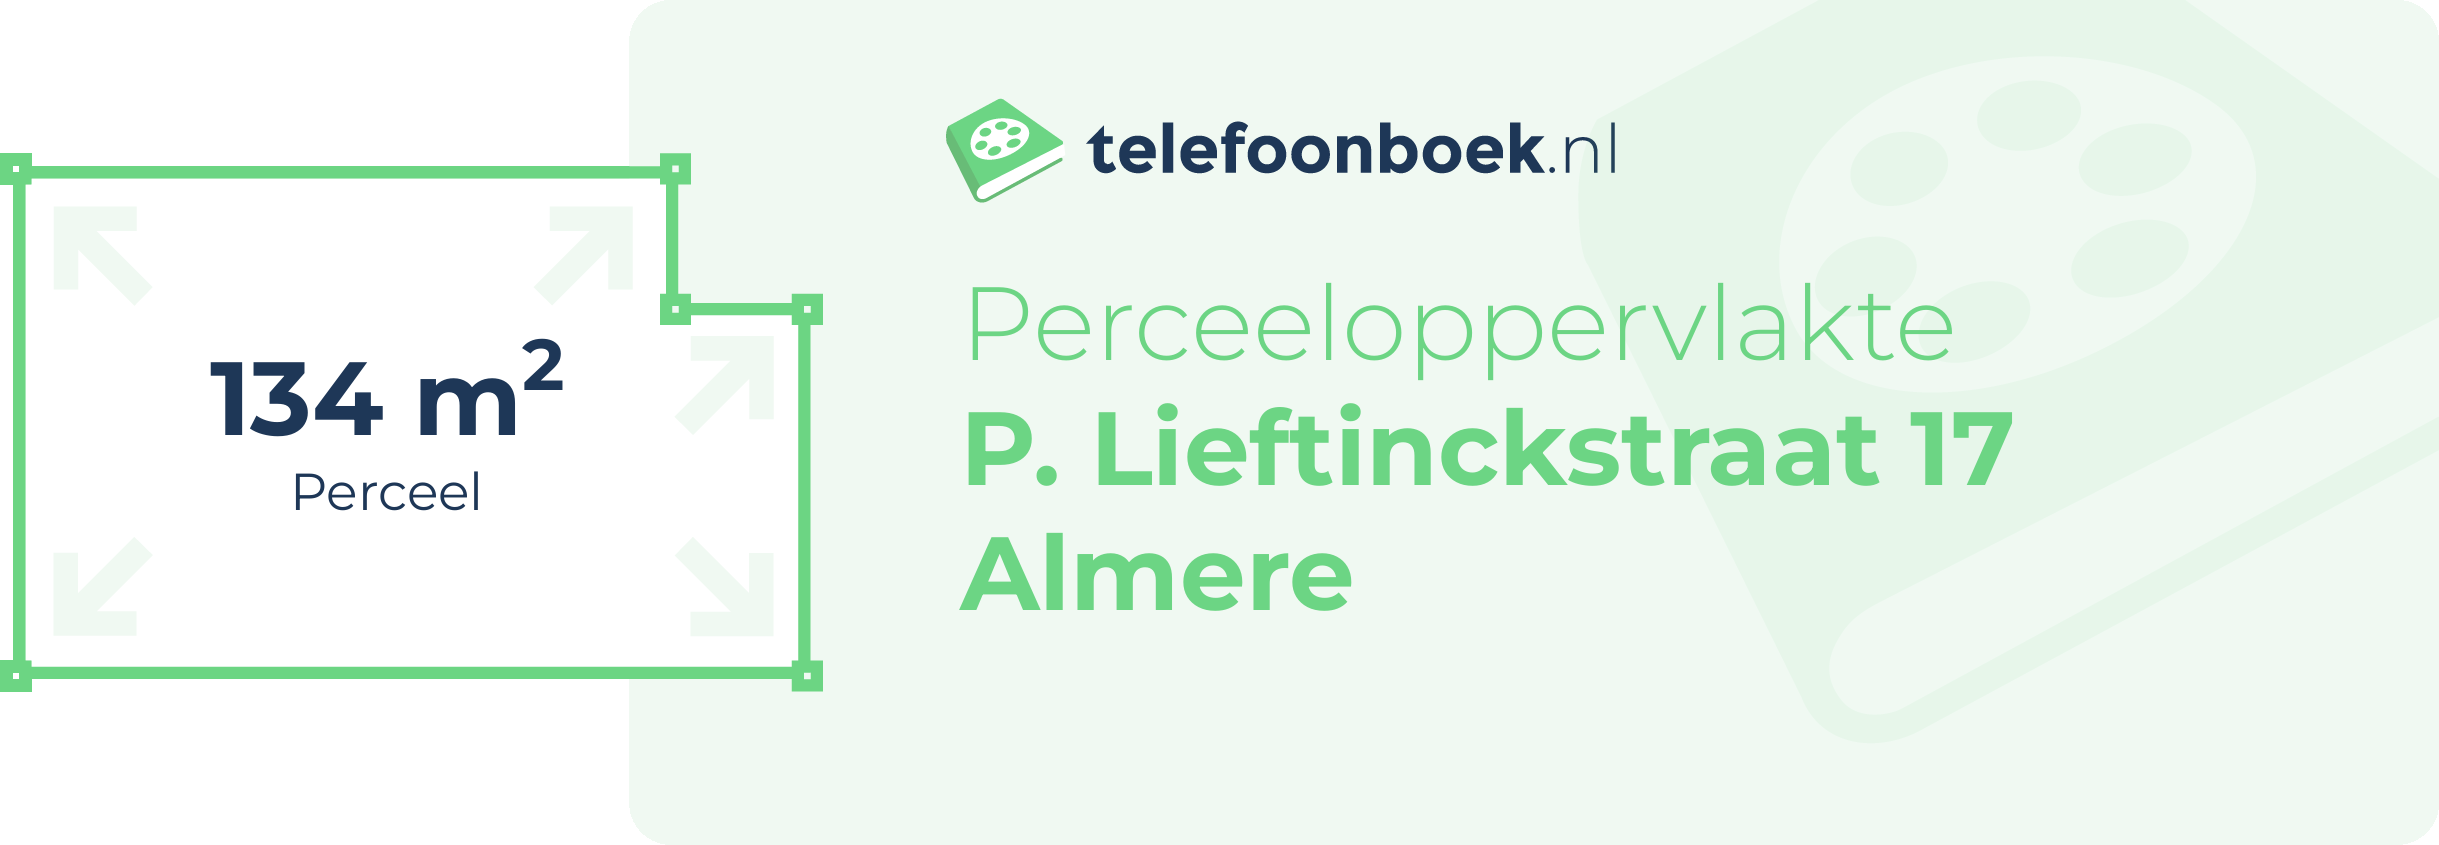 Perceeloppervlakte P. Lieftinckstraat 17 Almere